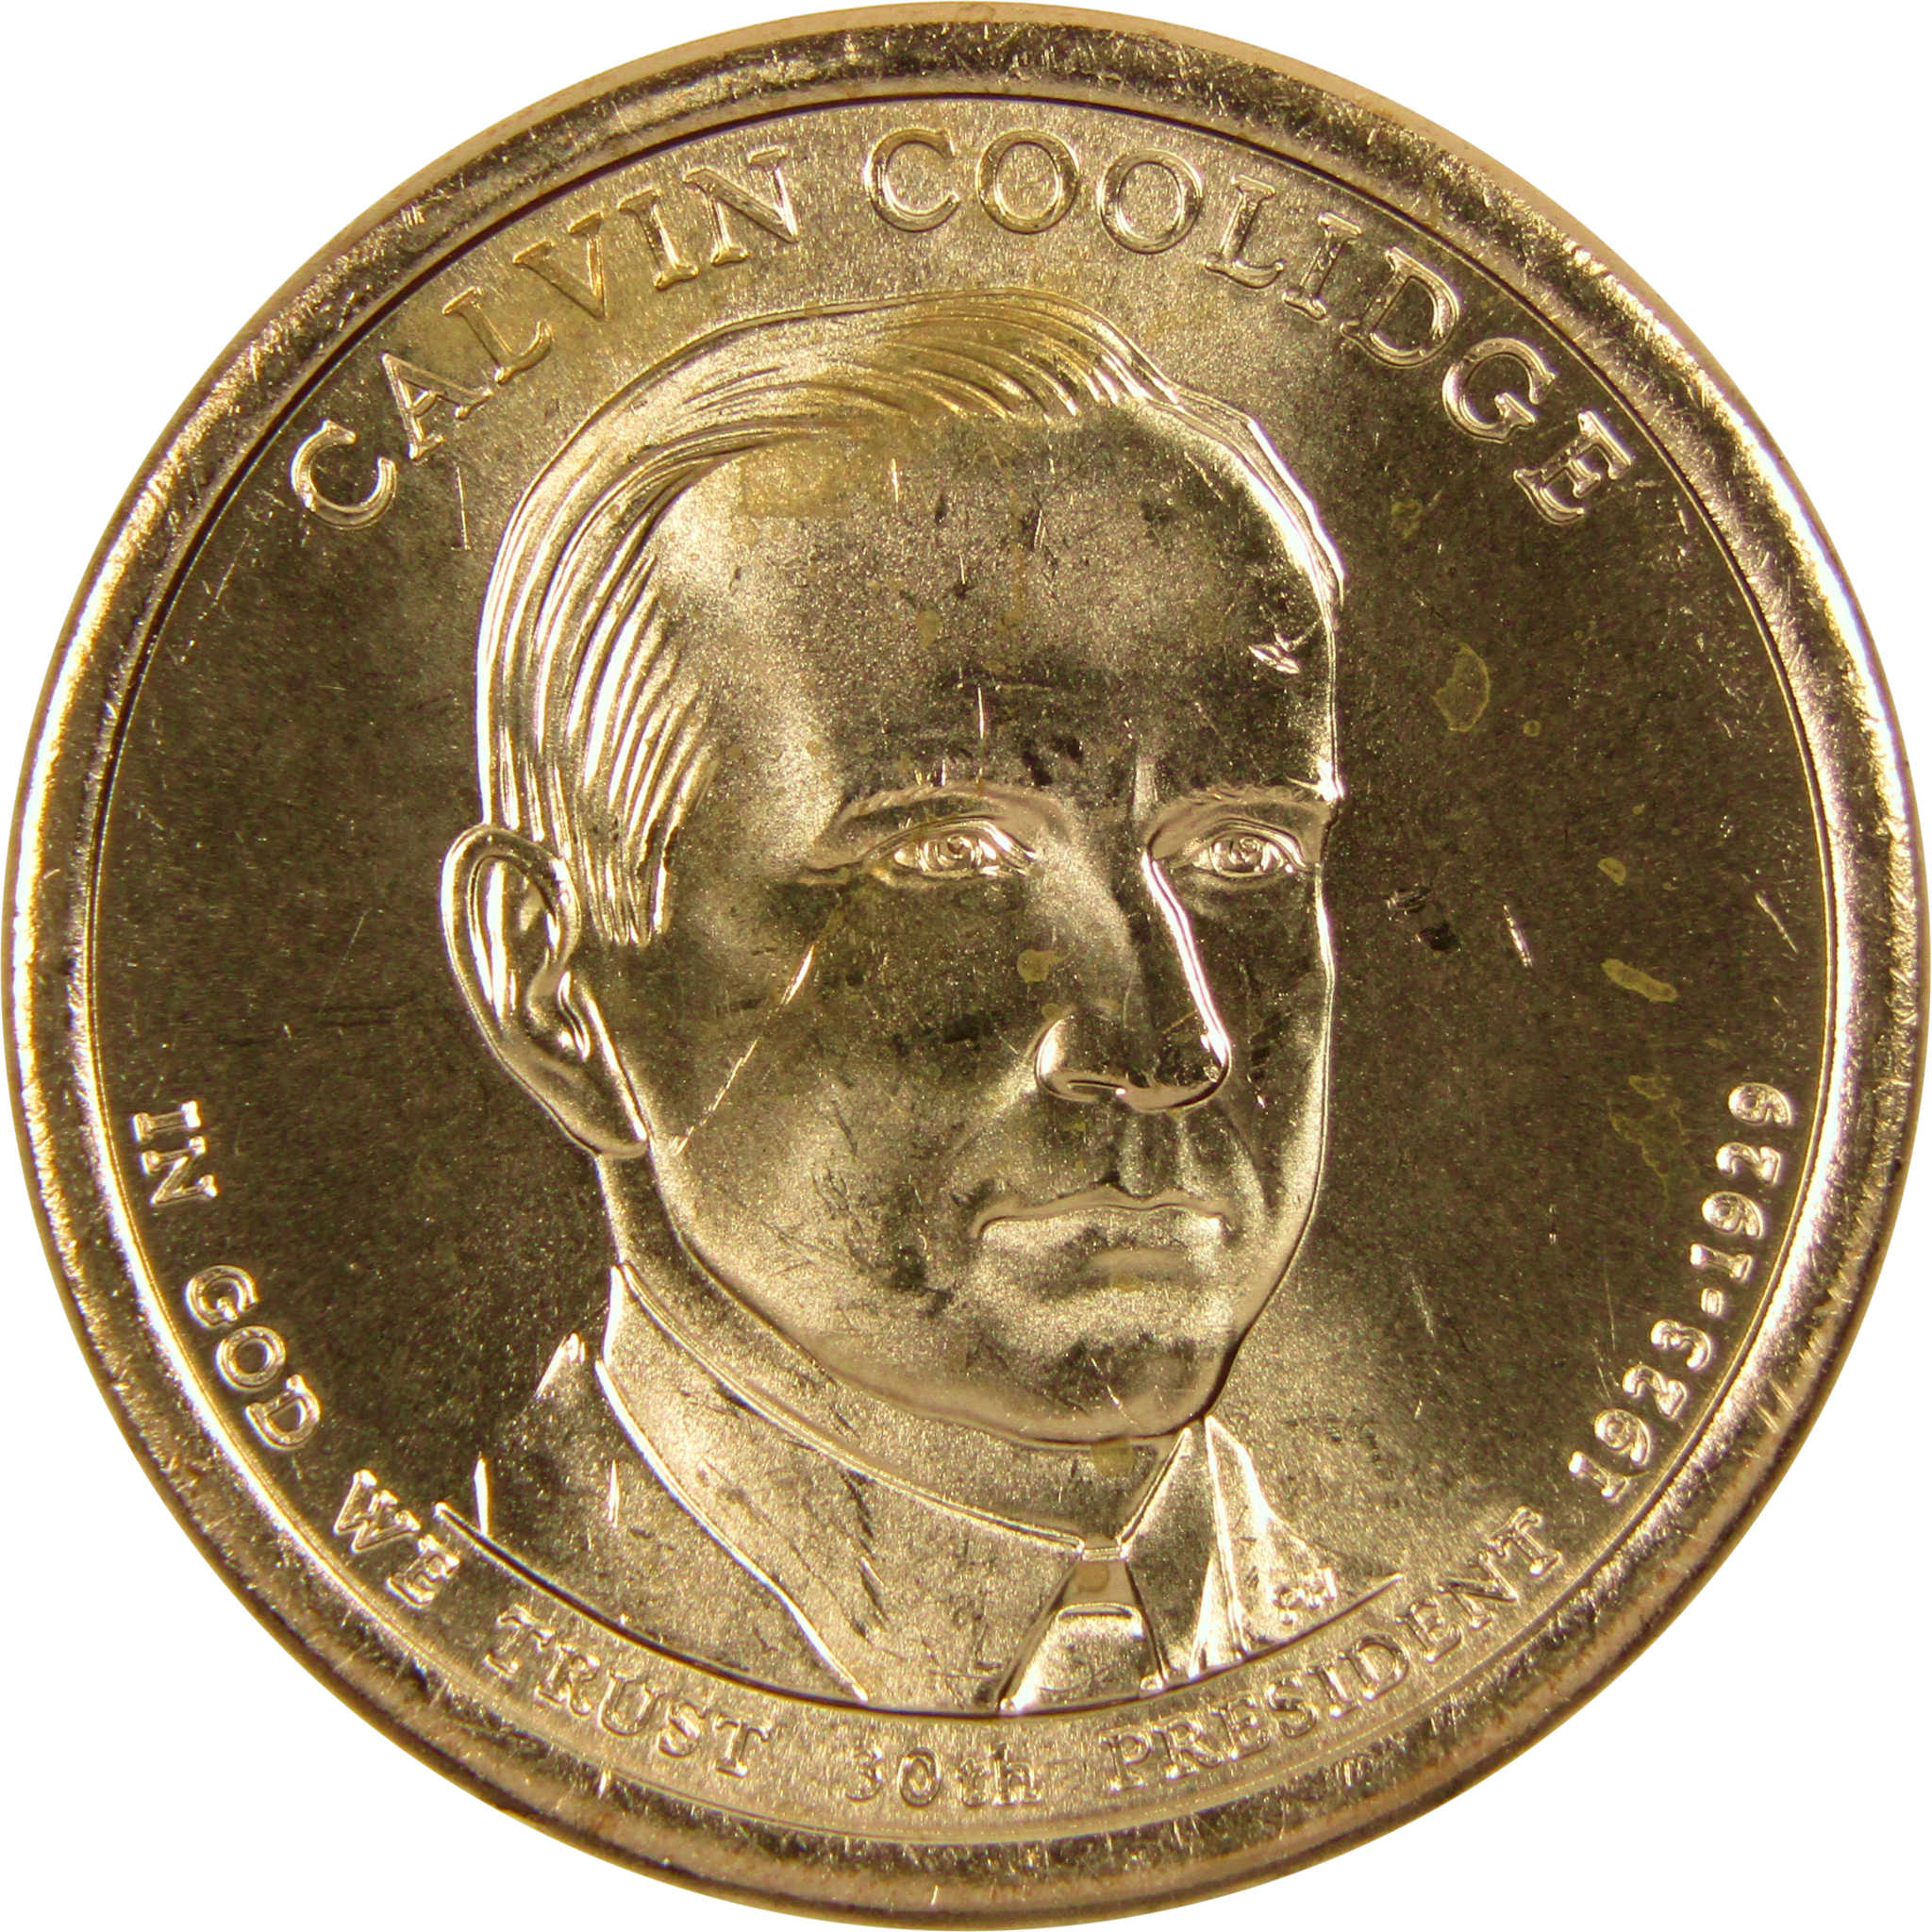 2014 D Calvin Coolidge Presidential Dollar BU Uncirculated $1 Coin